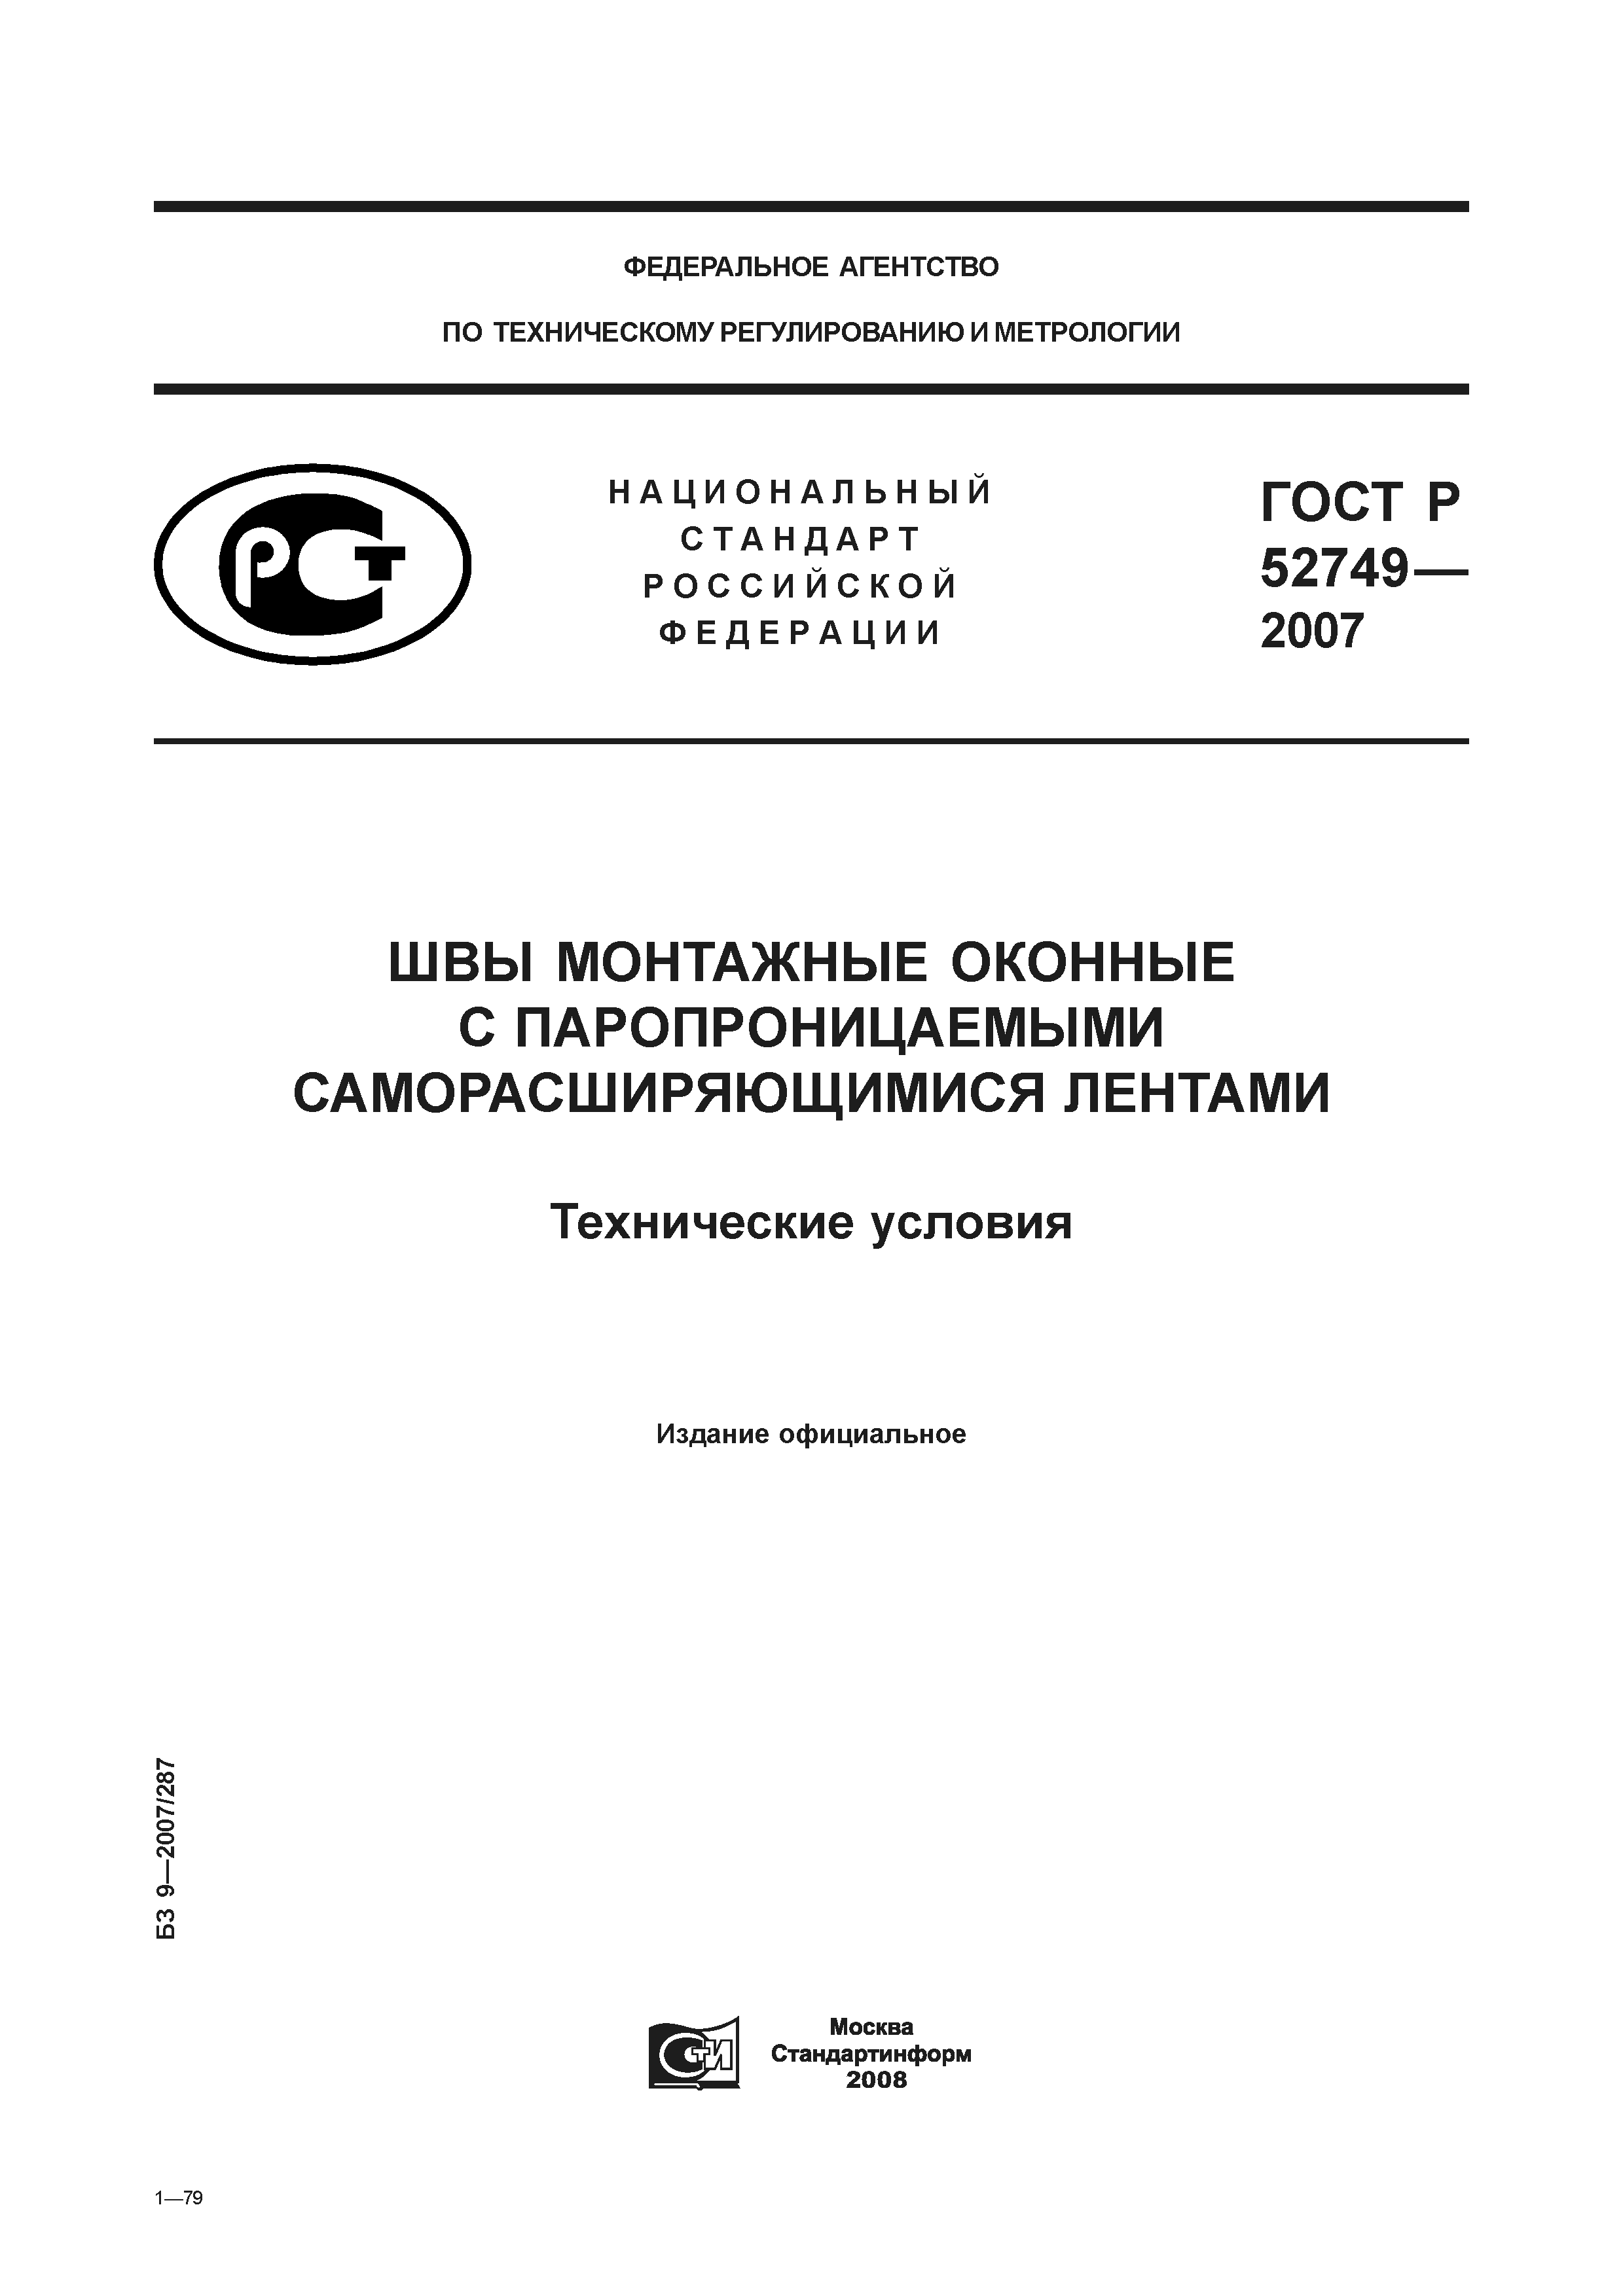 ГОСТ Р 52749-2007